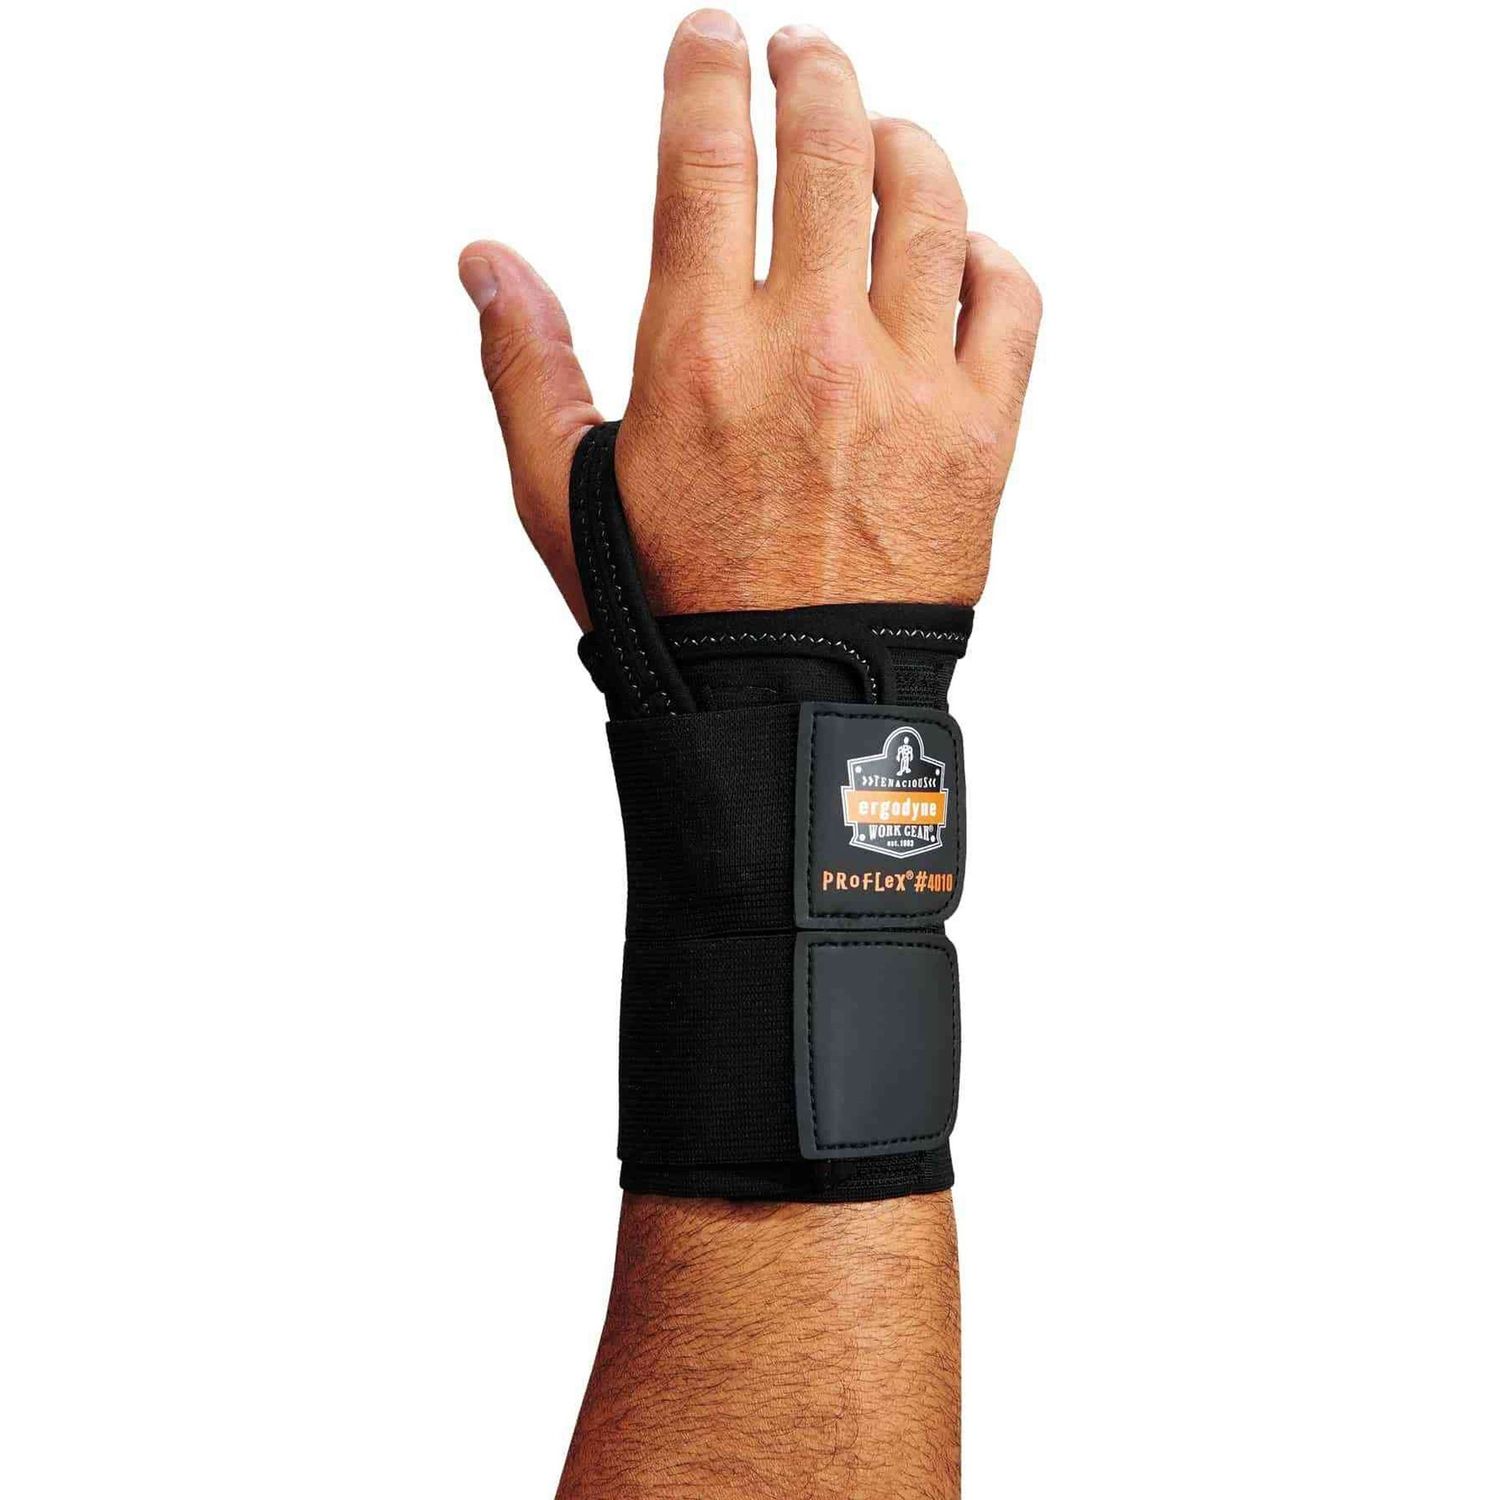 4010 Double Strap Wrist Support Black, Elastic